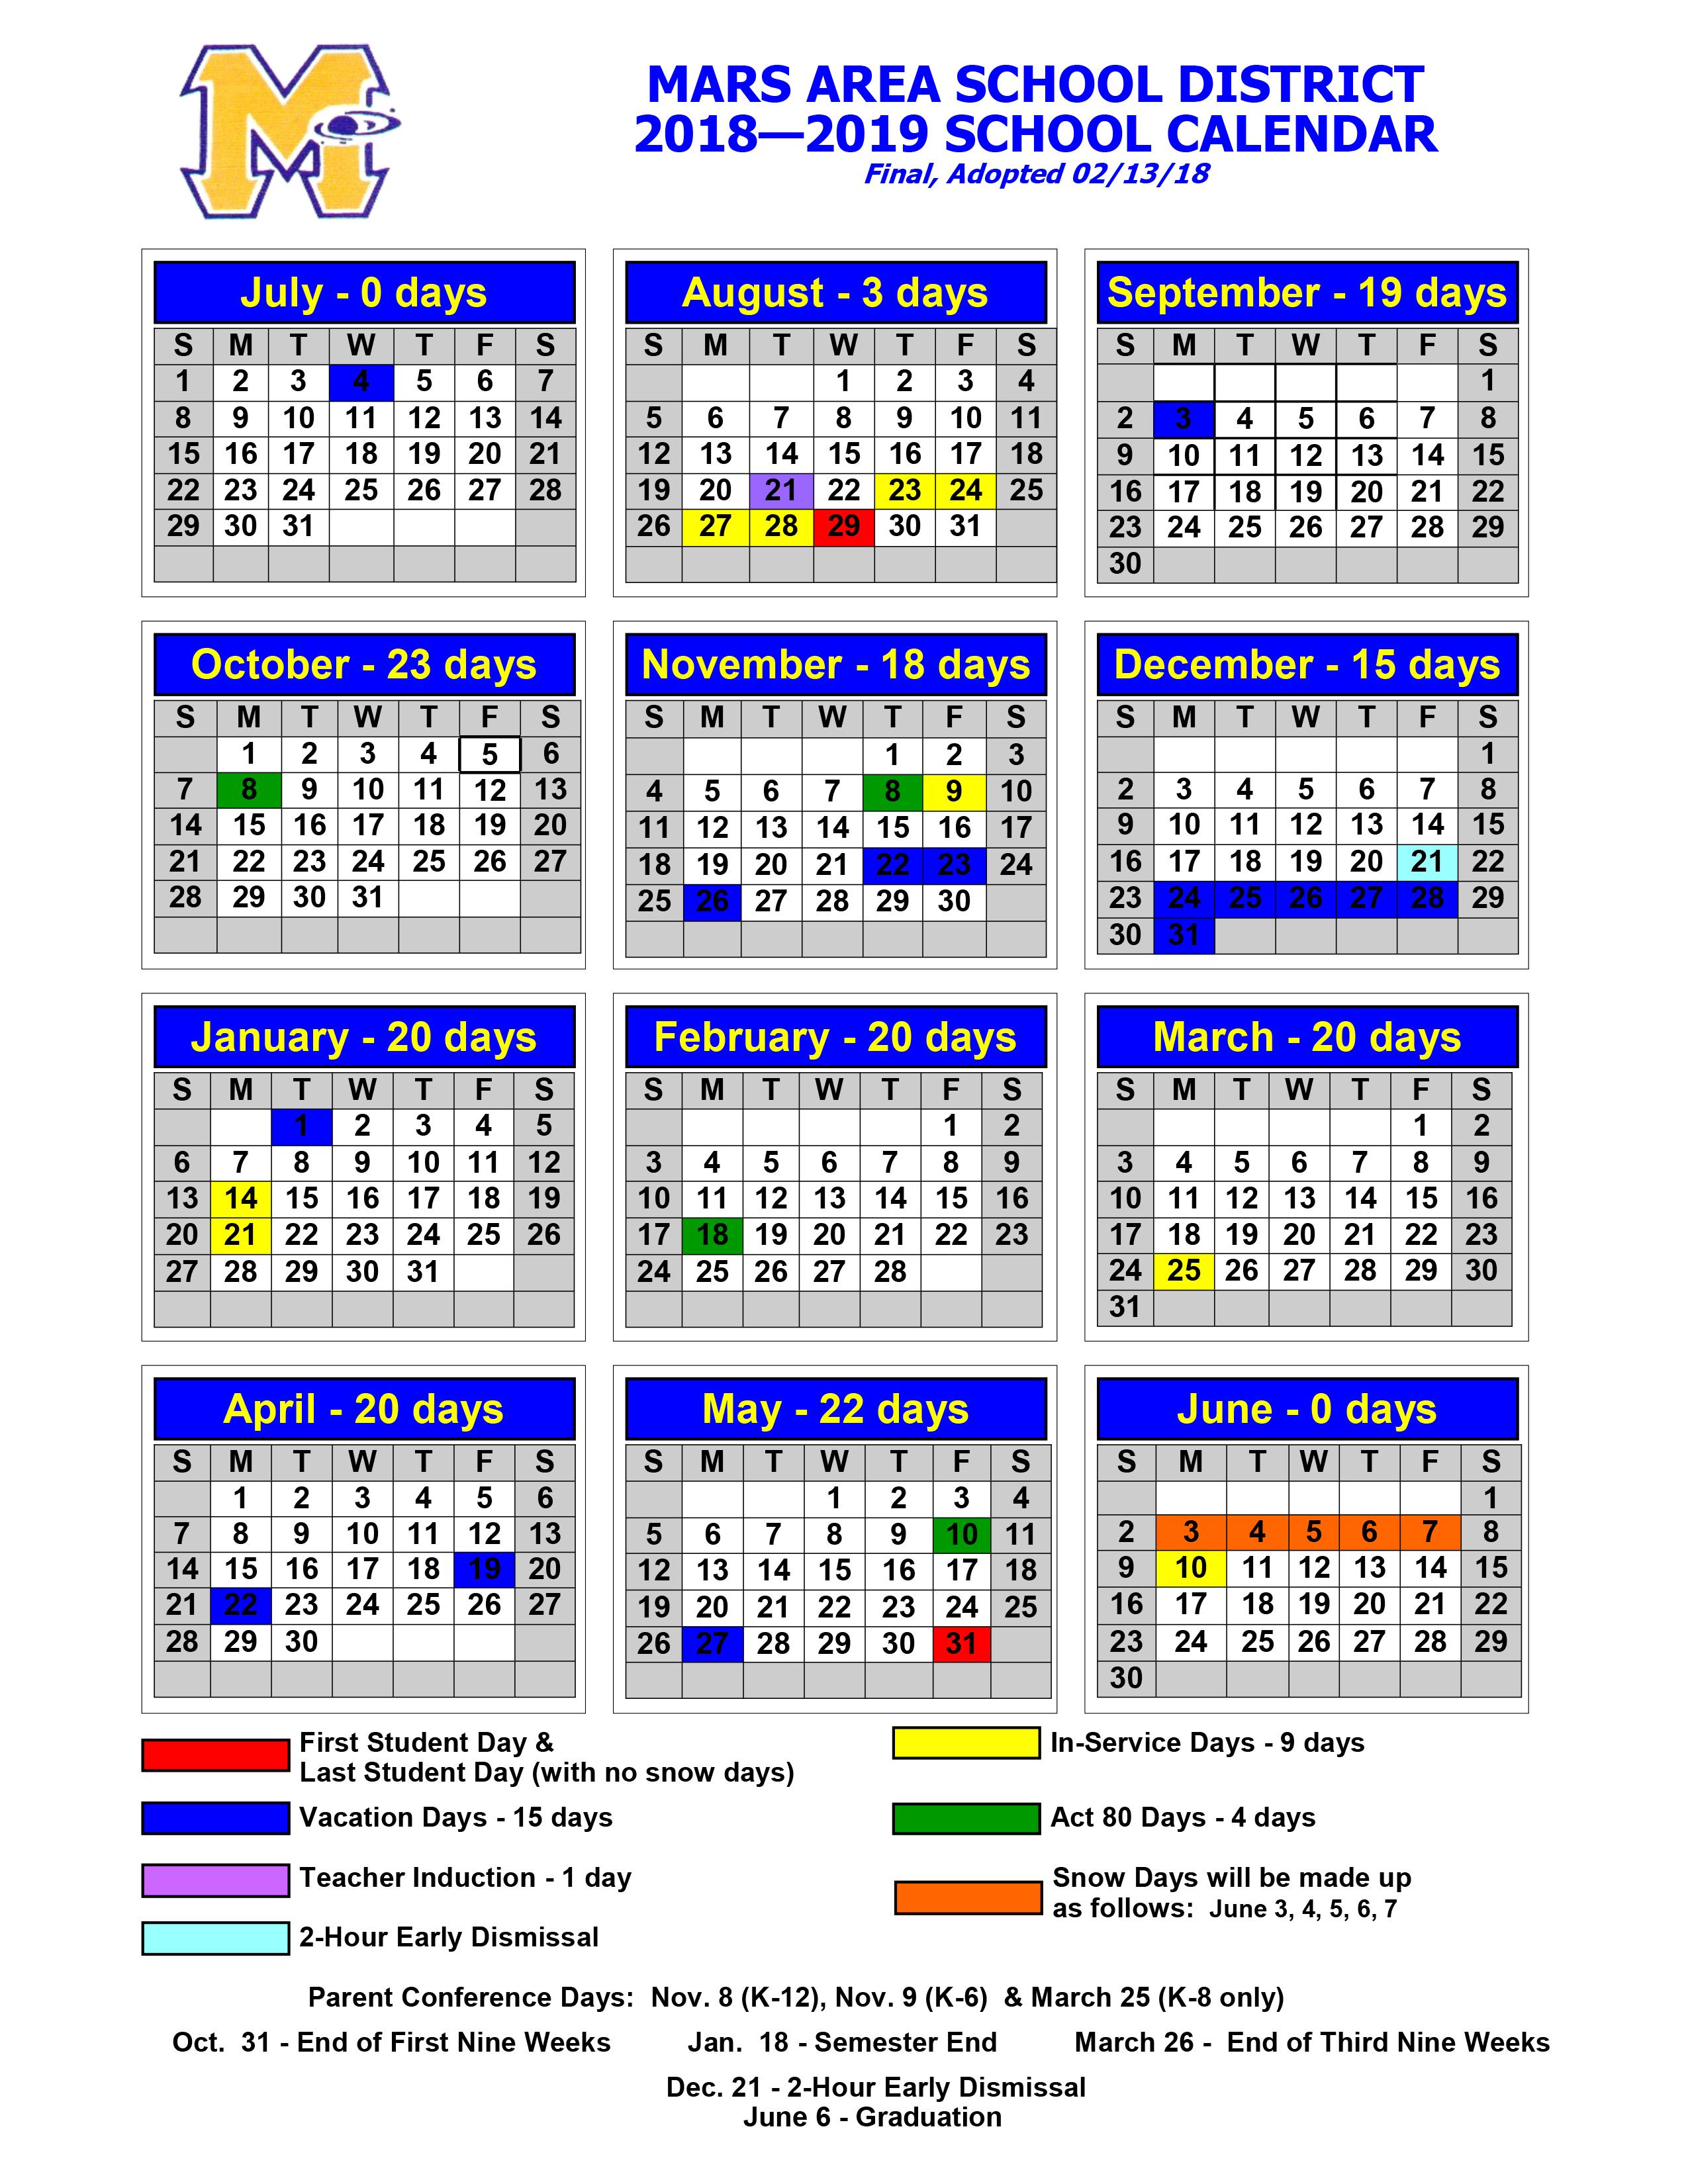 board-adopts-2018-2019-district-calendar-mars-area-school-district